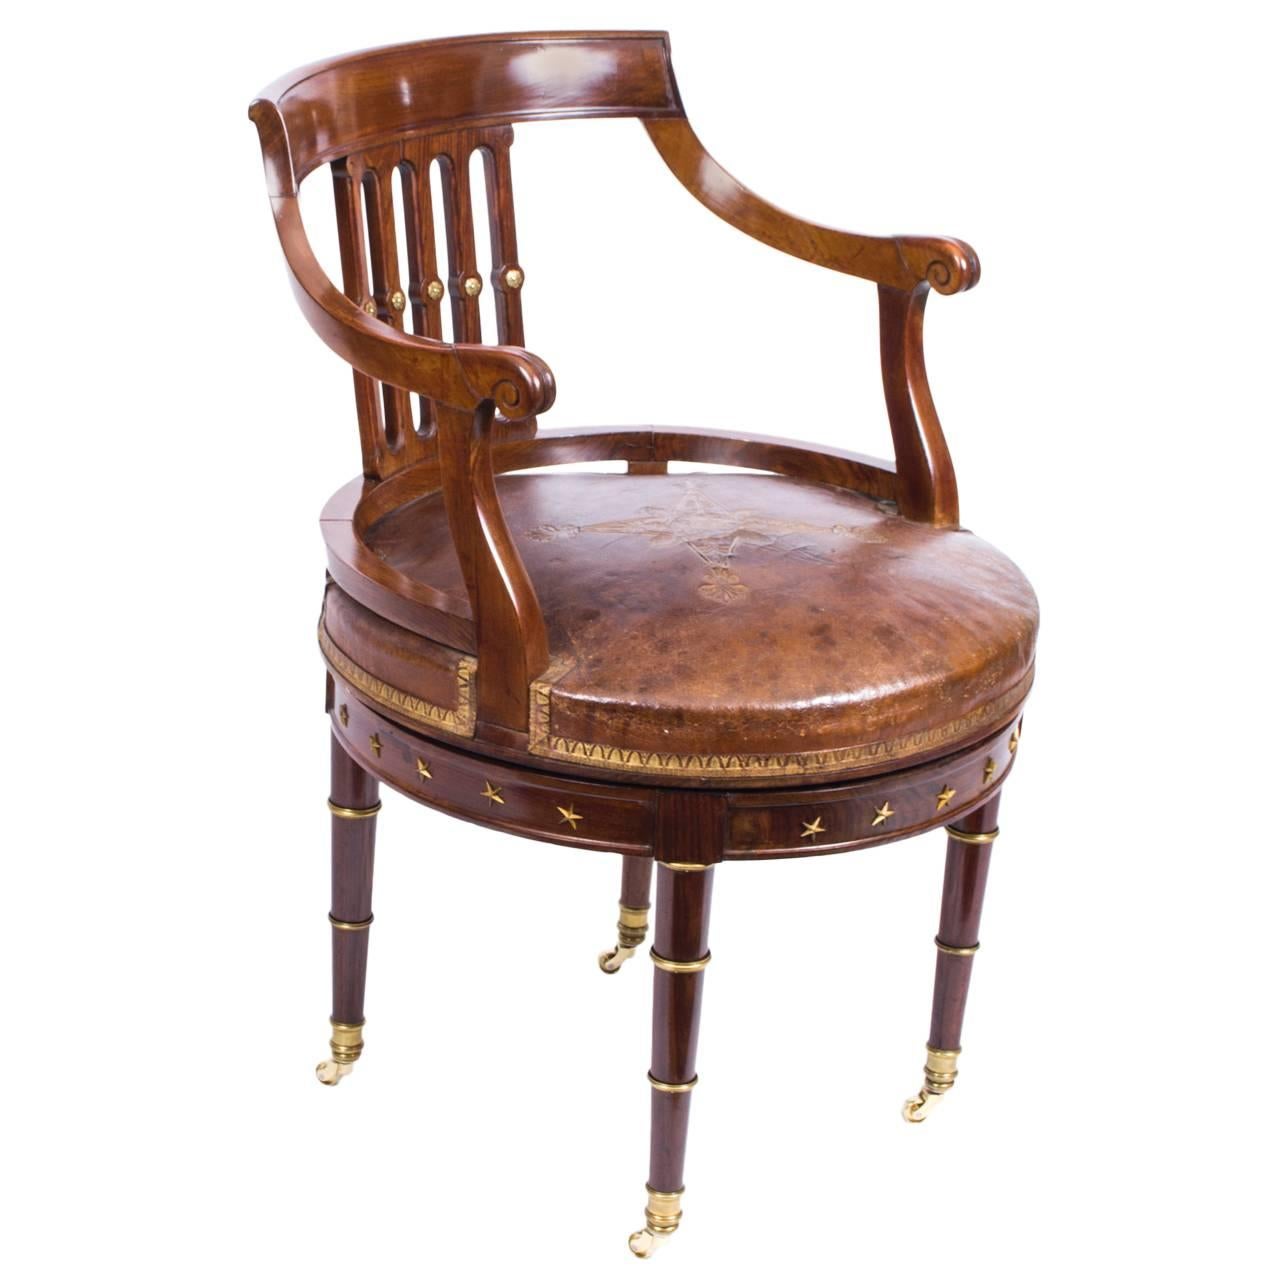 Antique French Empire Revolving Desk Chair, circa 1870